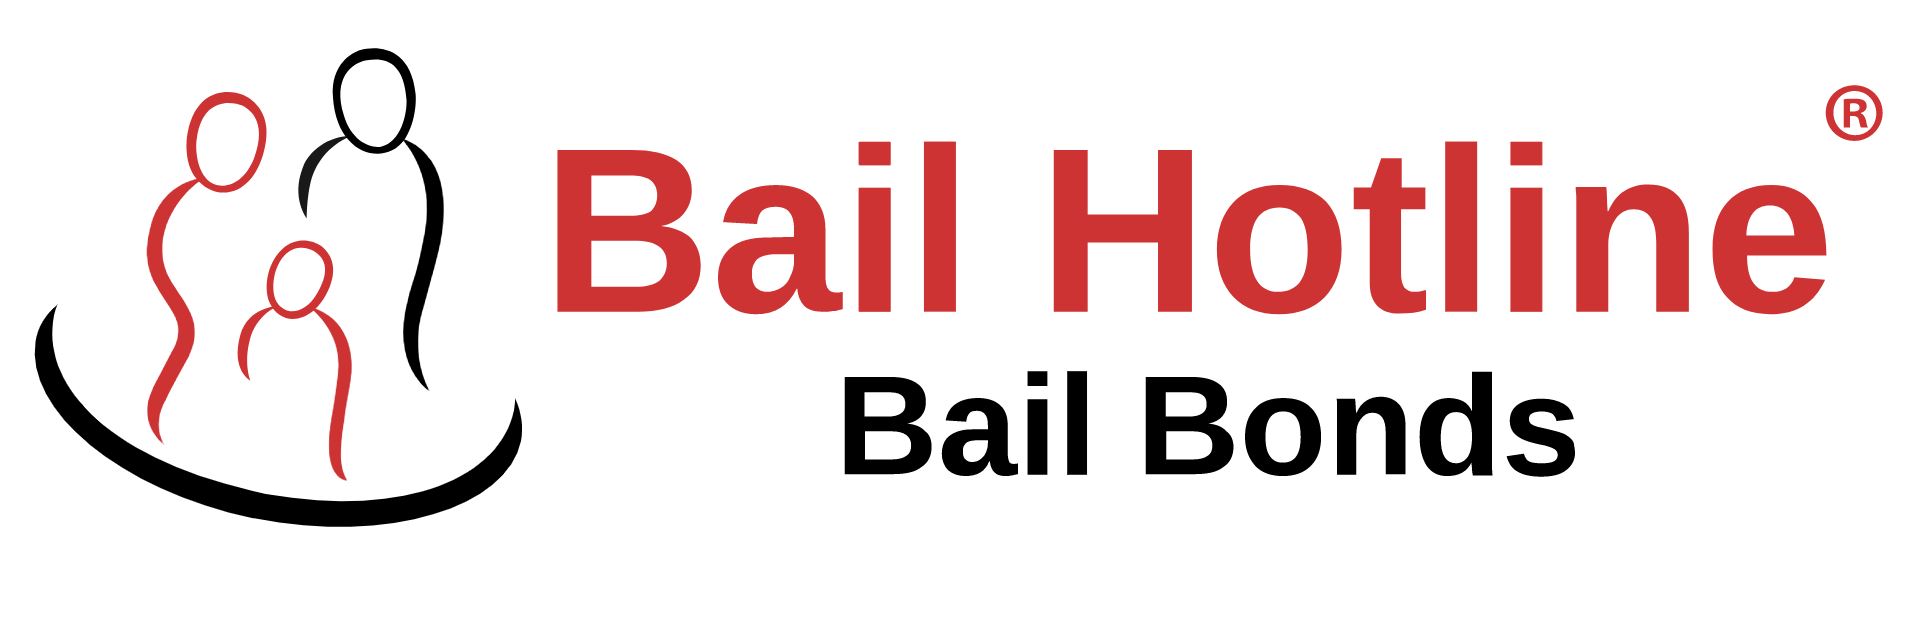 Bail Hotline Bail Bonds Glendale's Logo